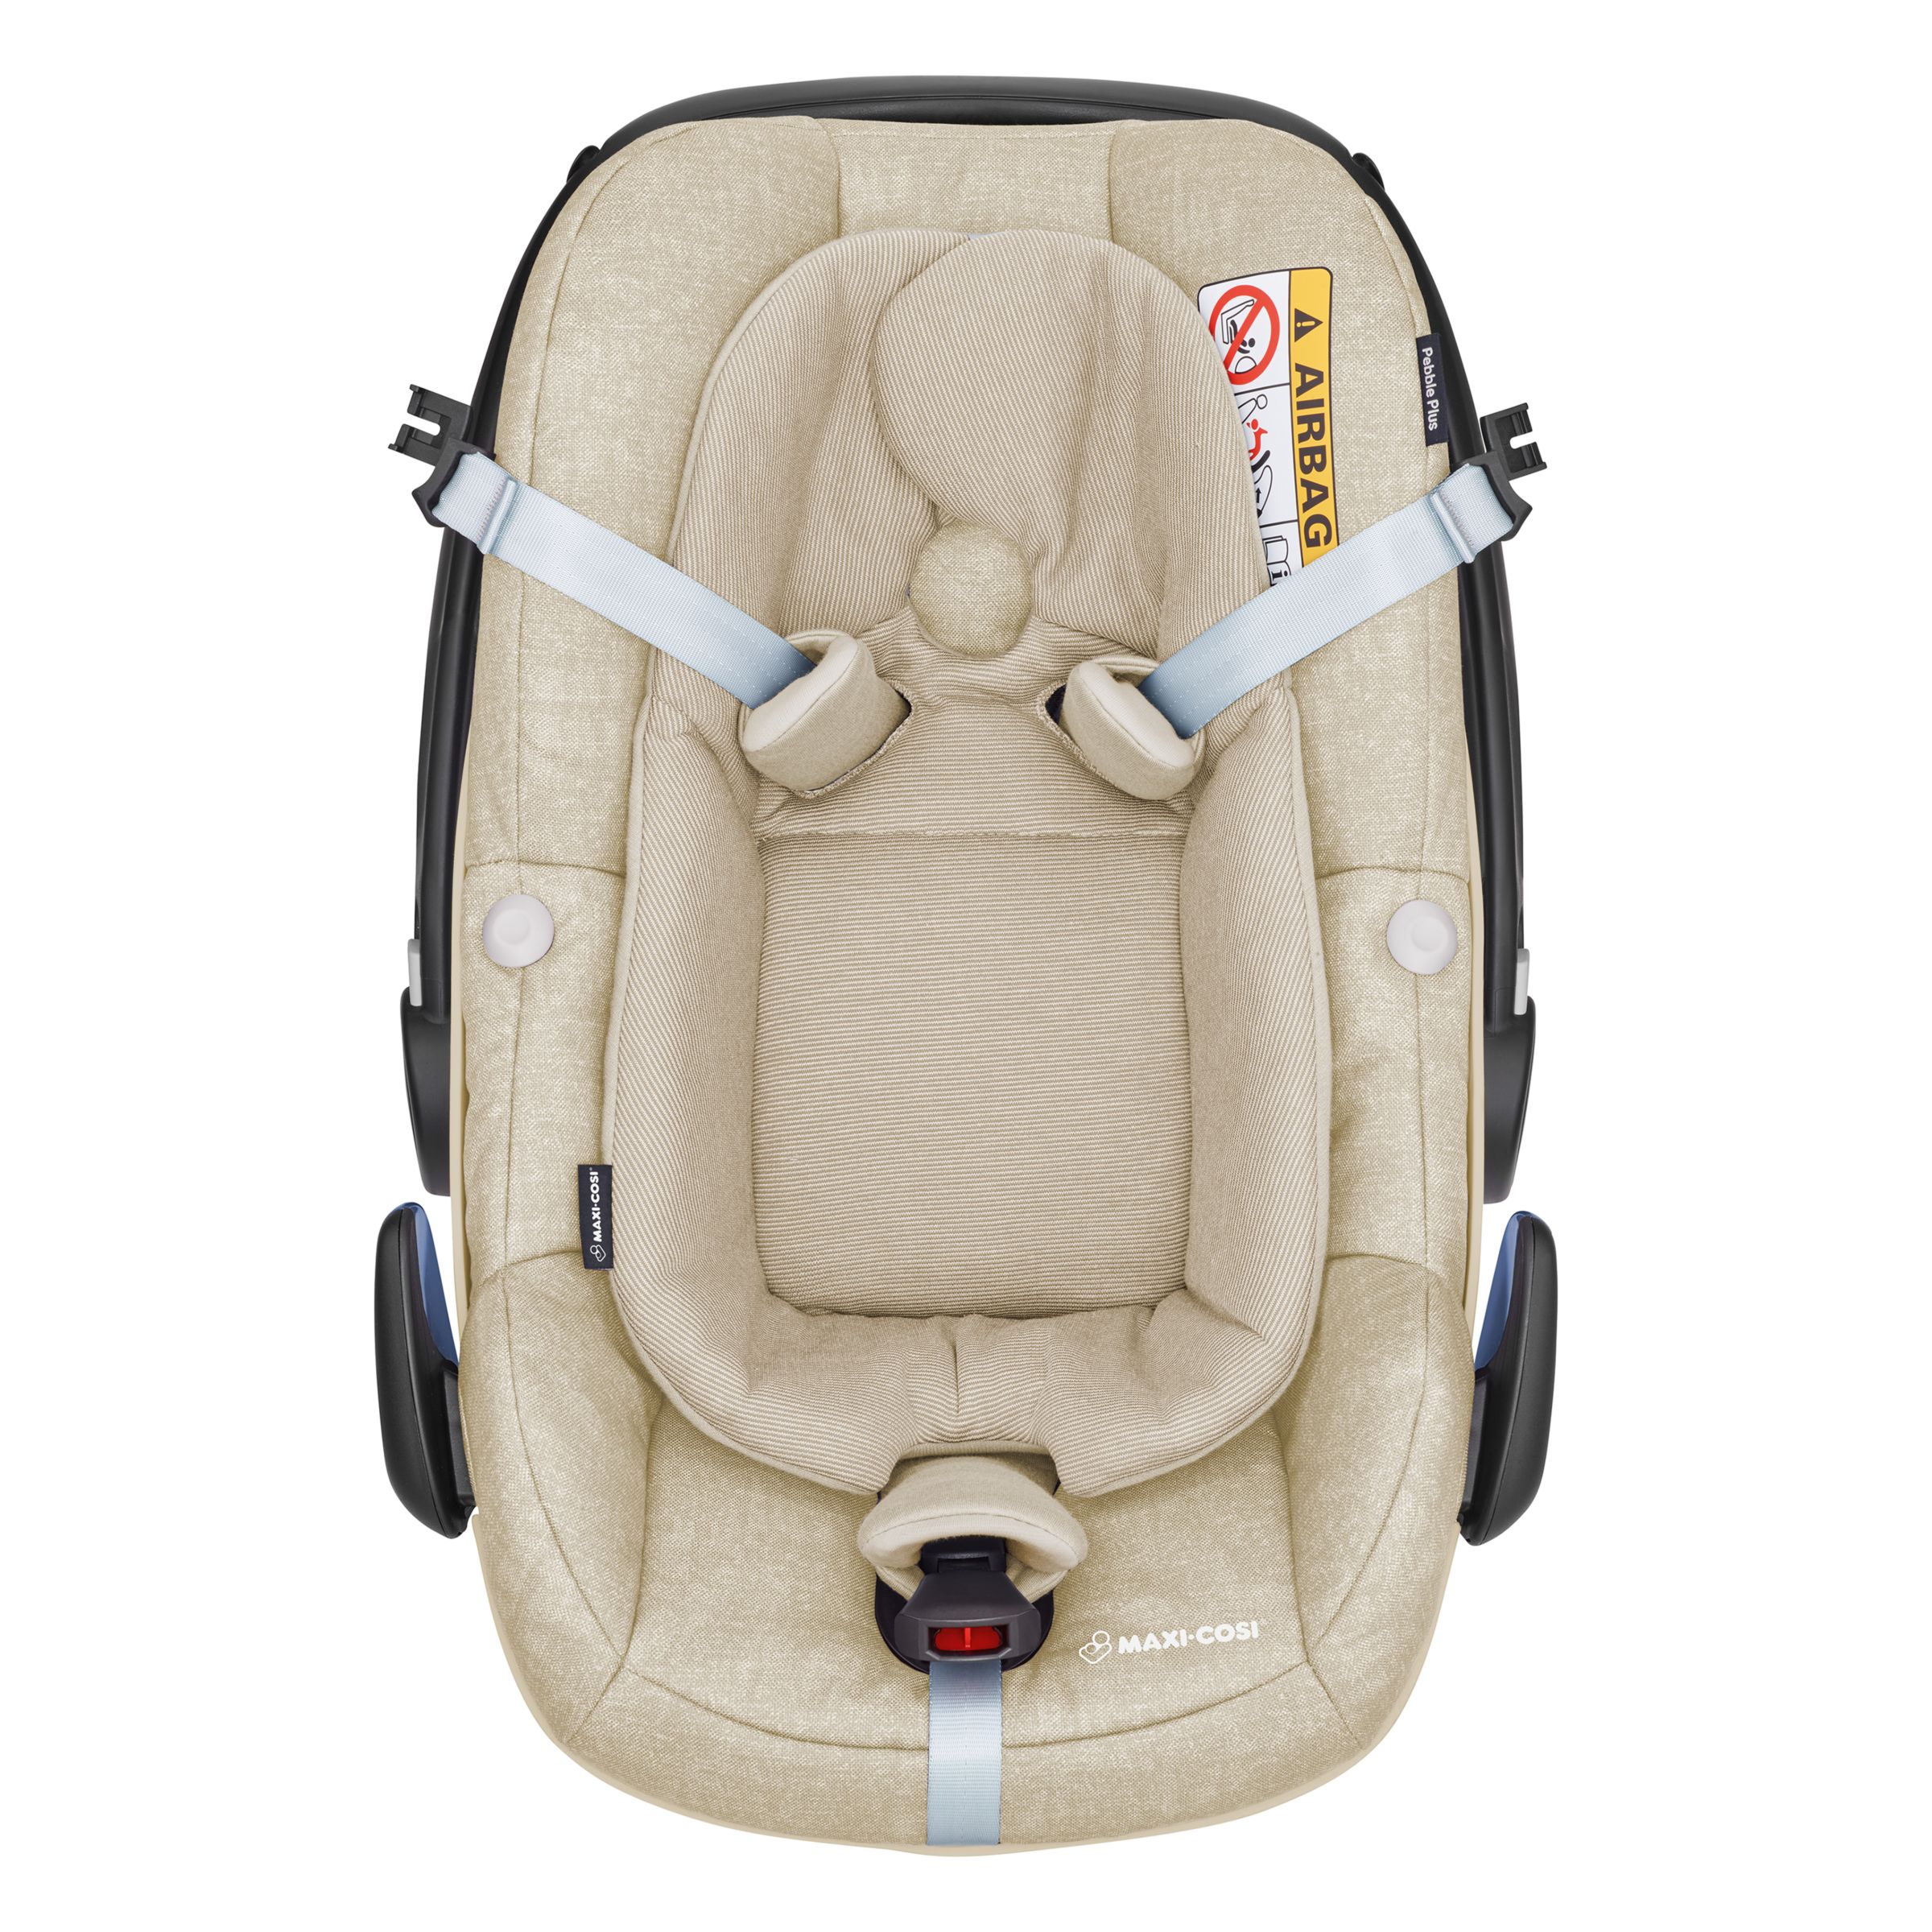 Maxi Cosi Pebble Plus I Size Group 0 Baby Car Seat Nomad Sand At John Lewis Partners